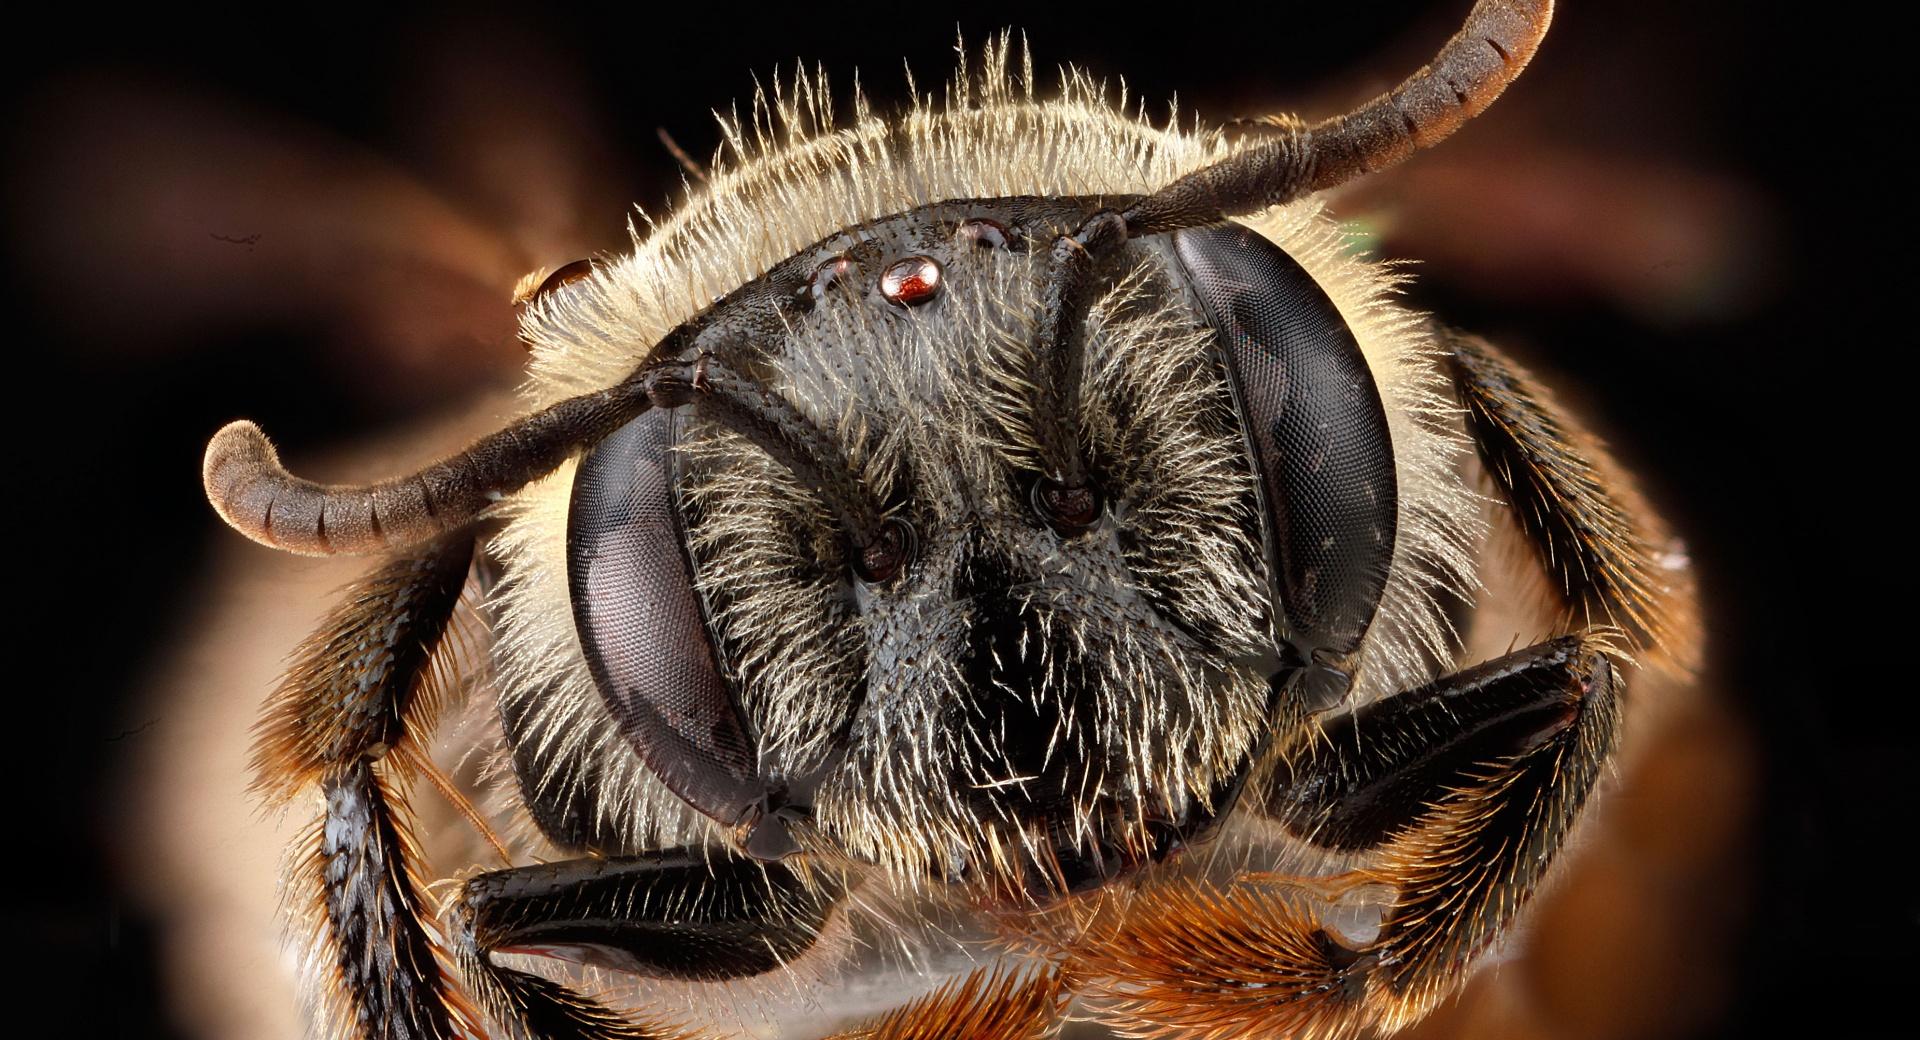 Andrena Fragilis Bee Head Macro at 2048 x 2048 iPad size wallpapers HD quality